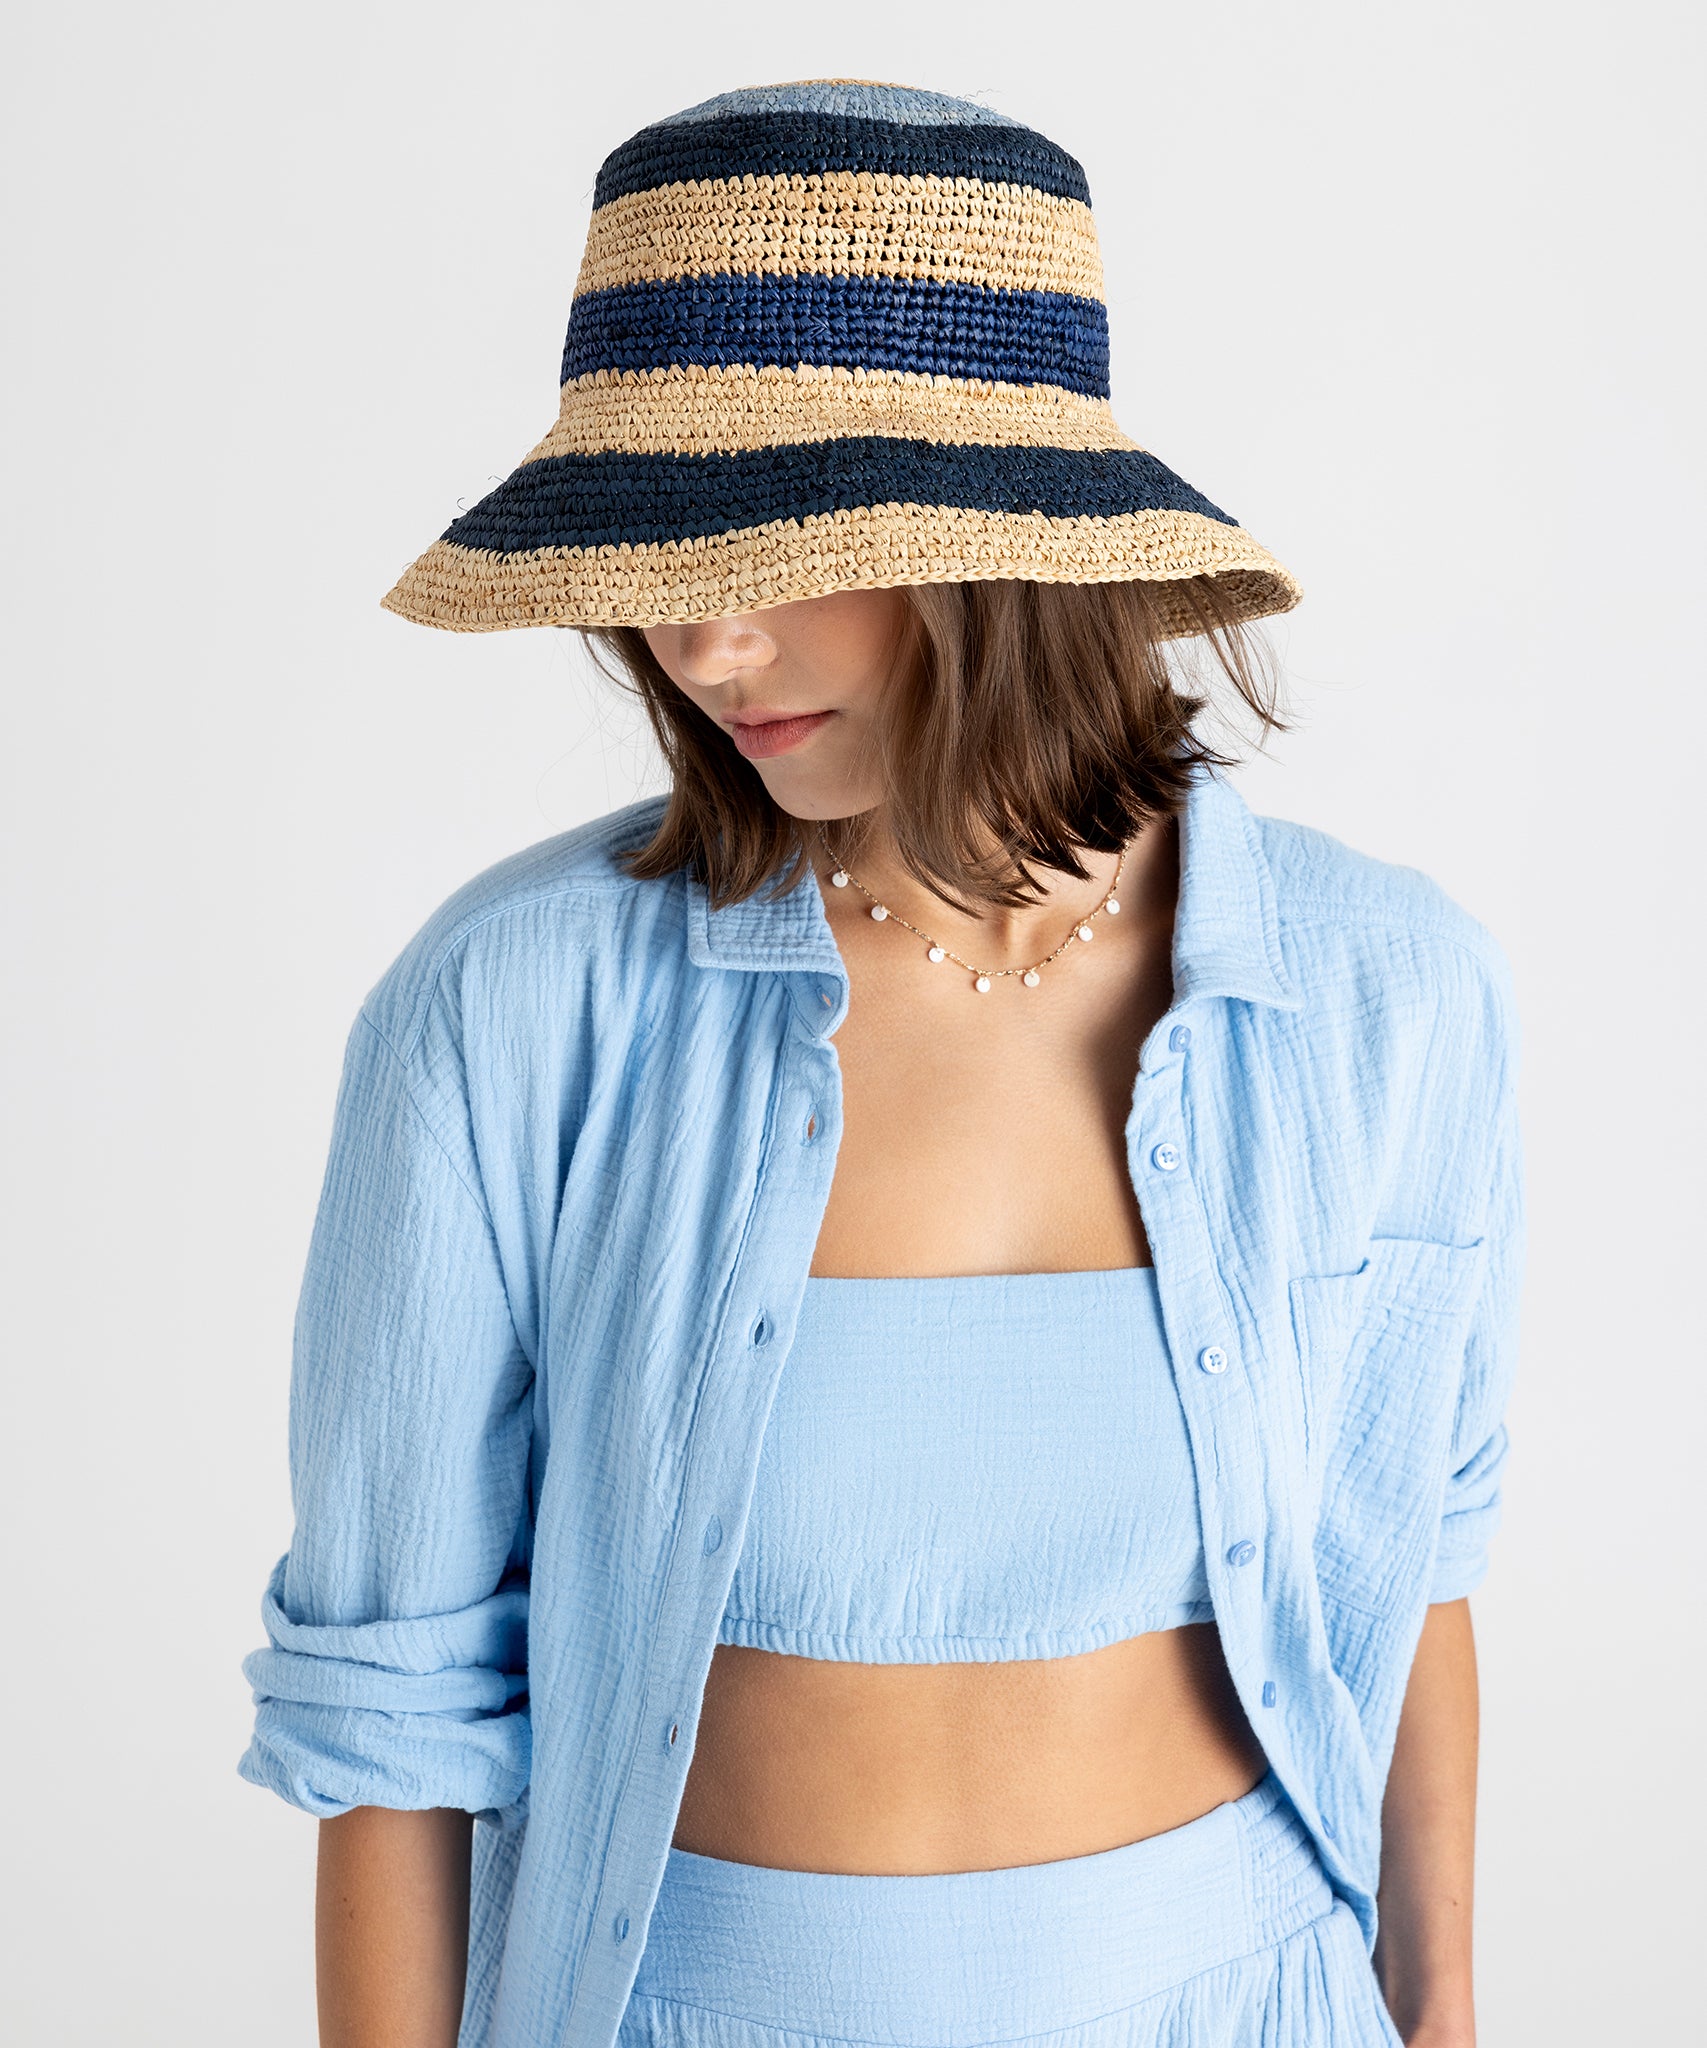 Tropic Stripe Hat in color Sea Blue on model